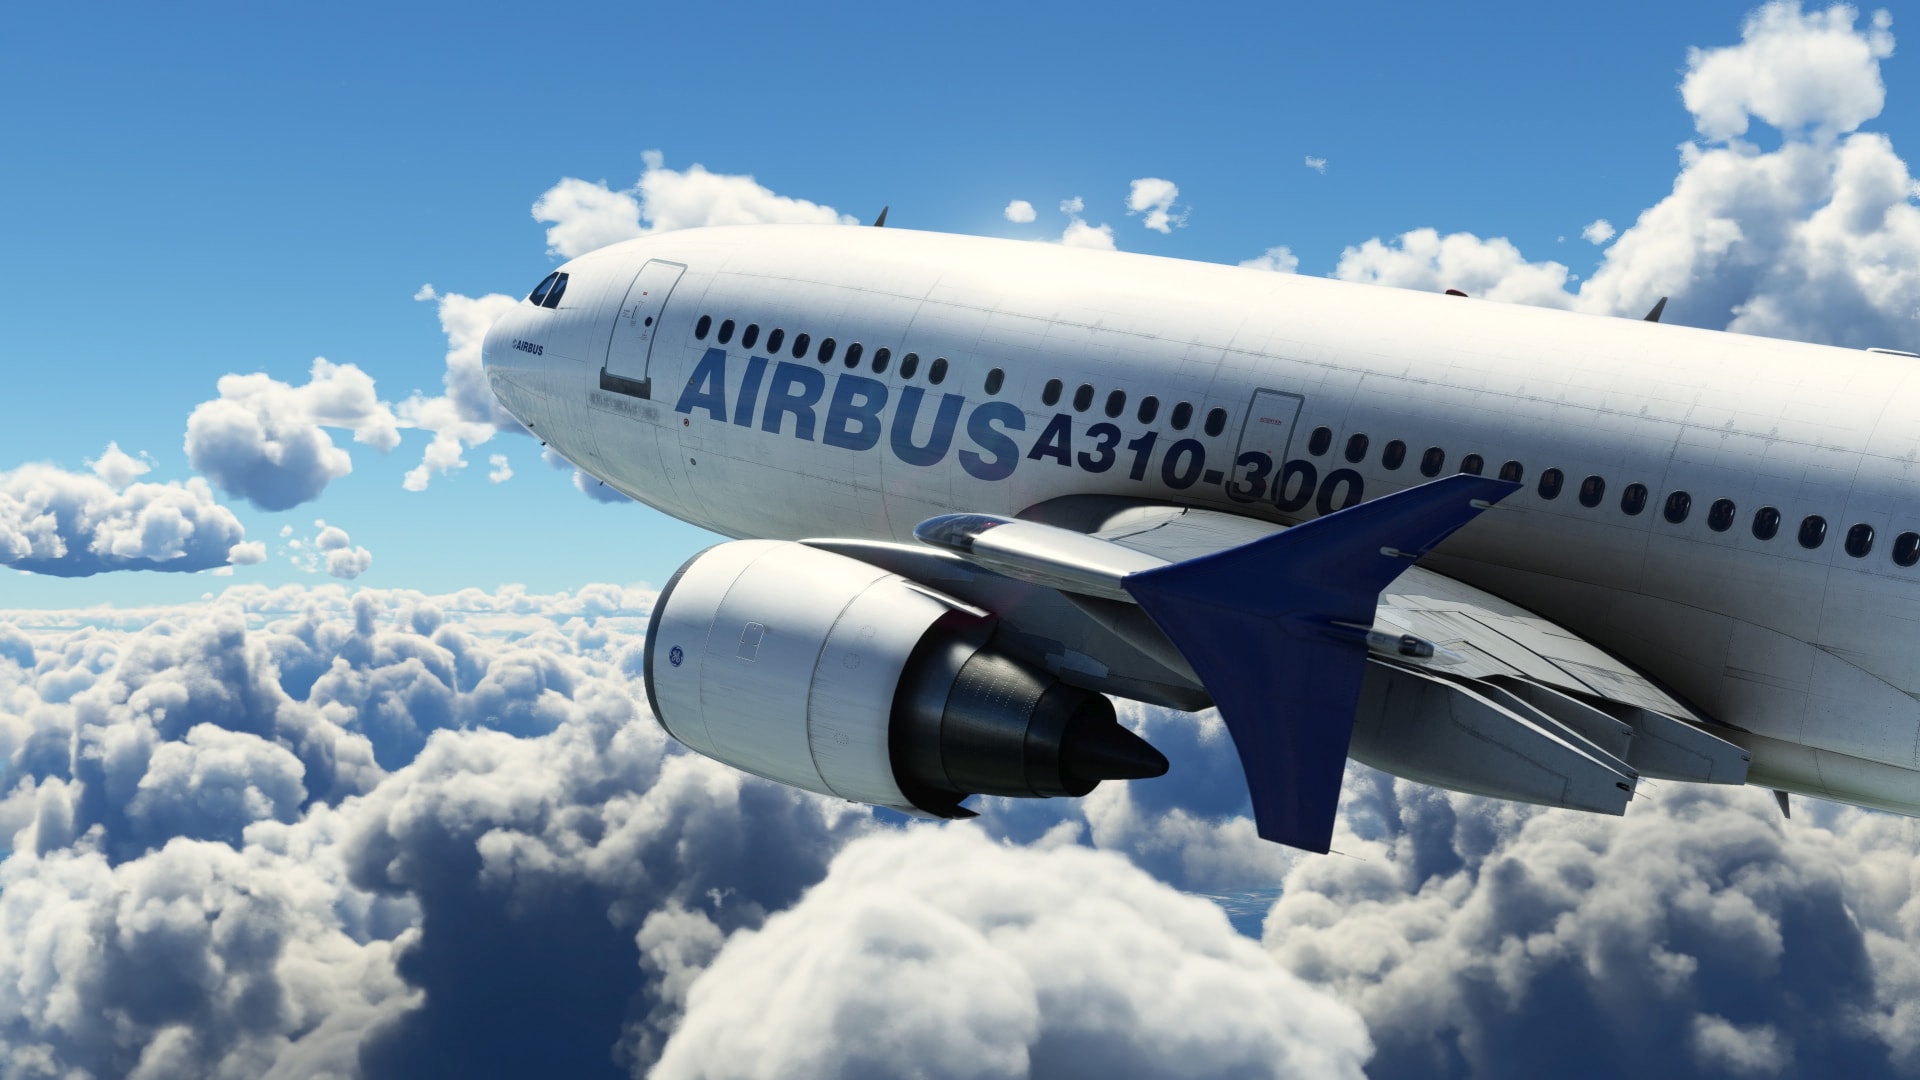 Microsoft Flight Simulator Releases World Update IX: Italy and